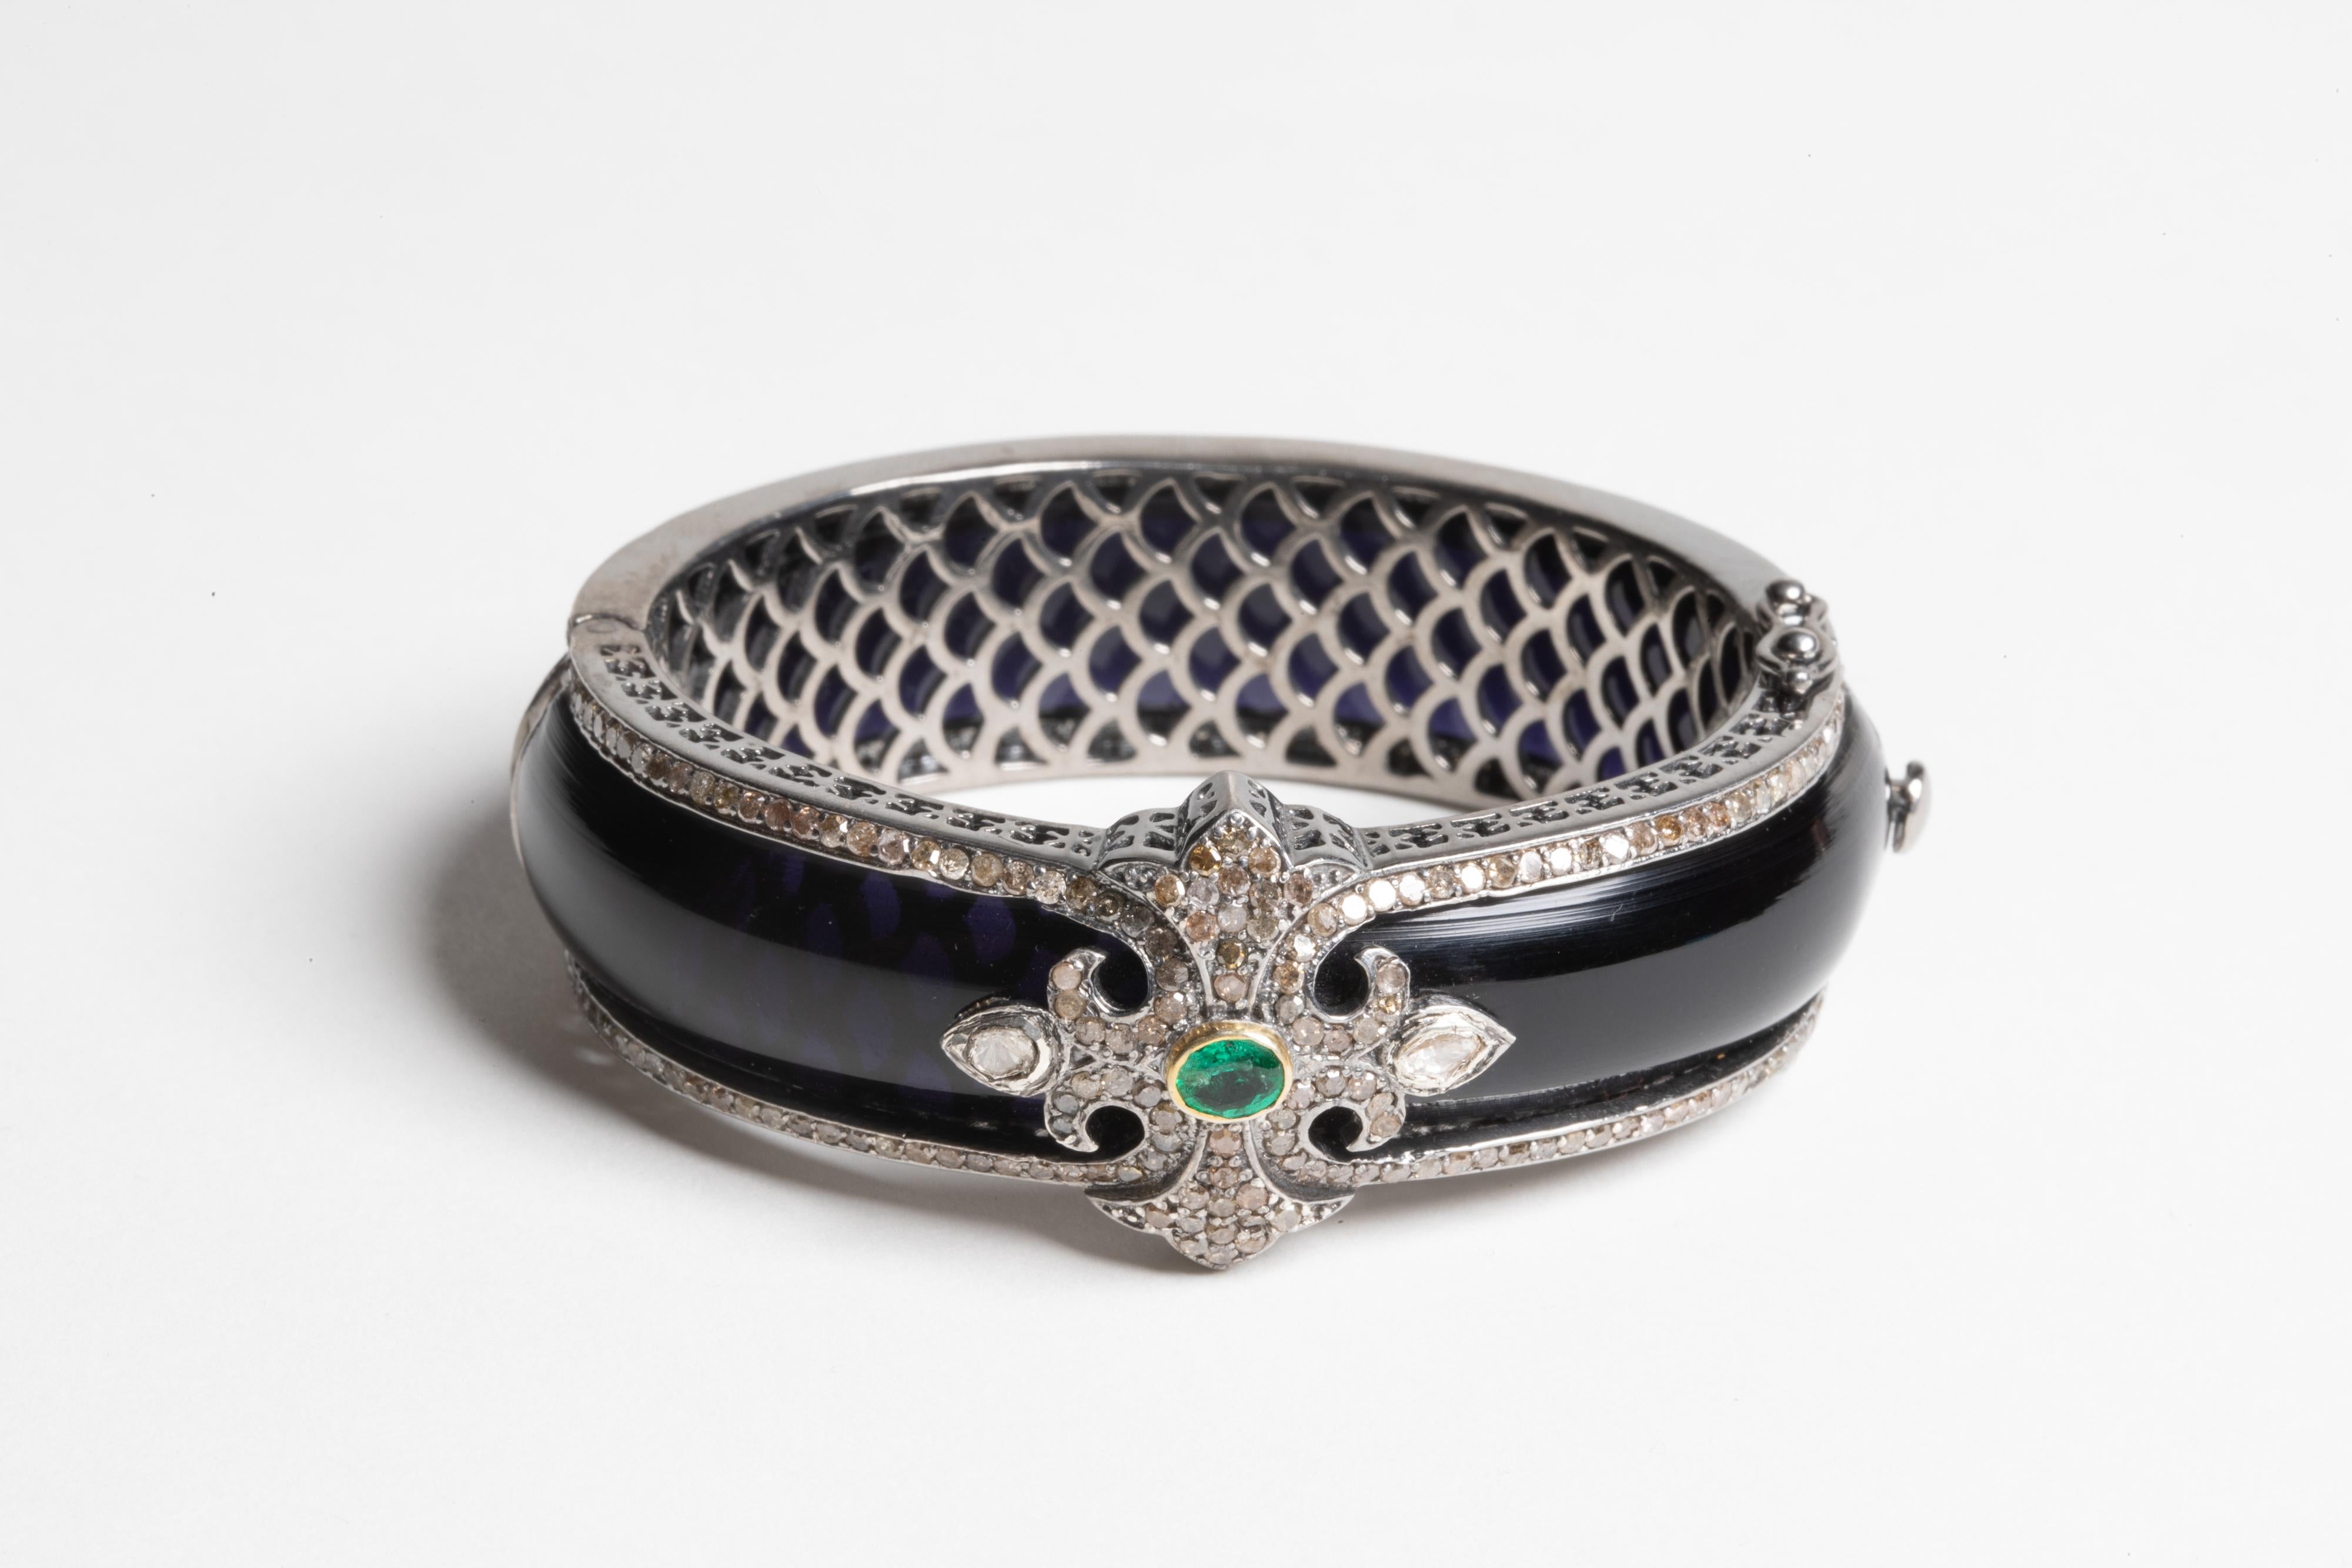 Oval Cut Black Bakelite Cuff Bracelet with Emerald and Diamonds